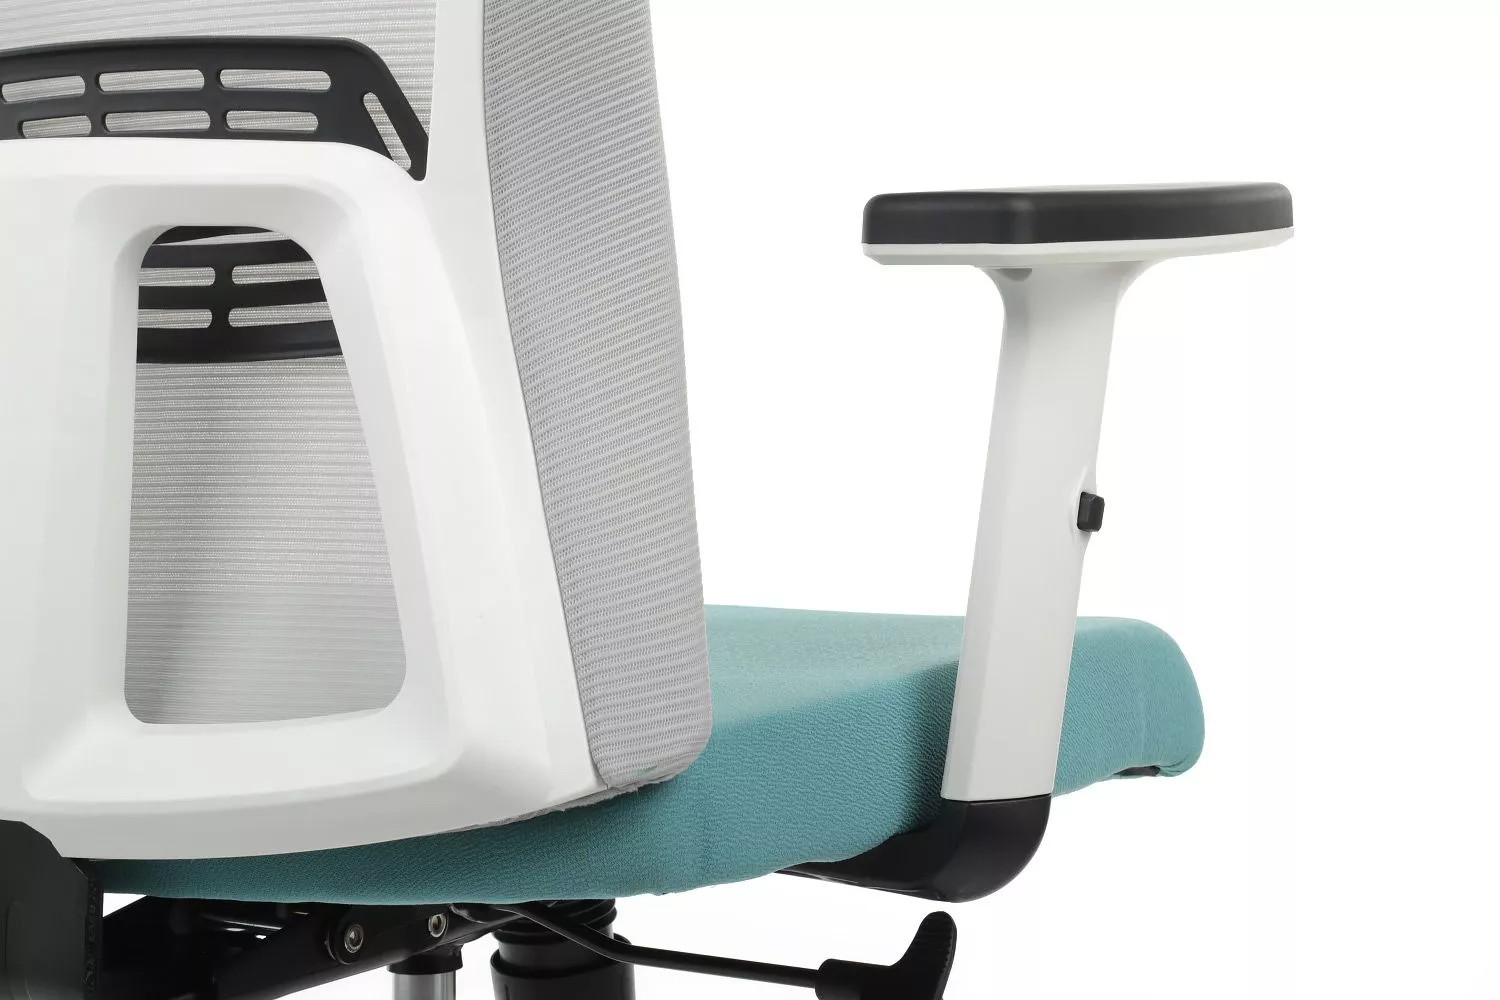 Кресло для персонала Riva Chair RCH B259Y-01 серый / бирюзовый